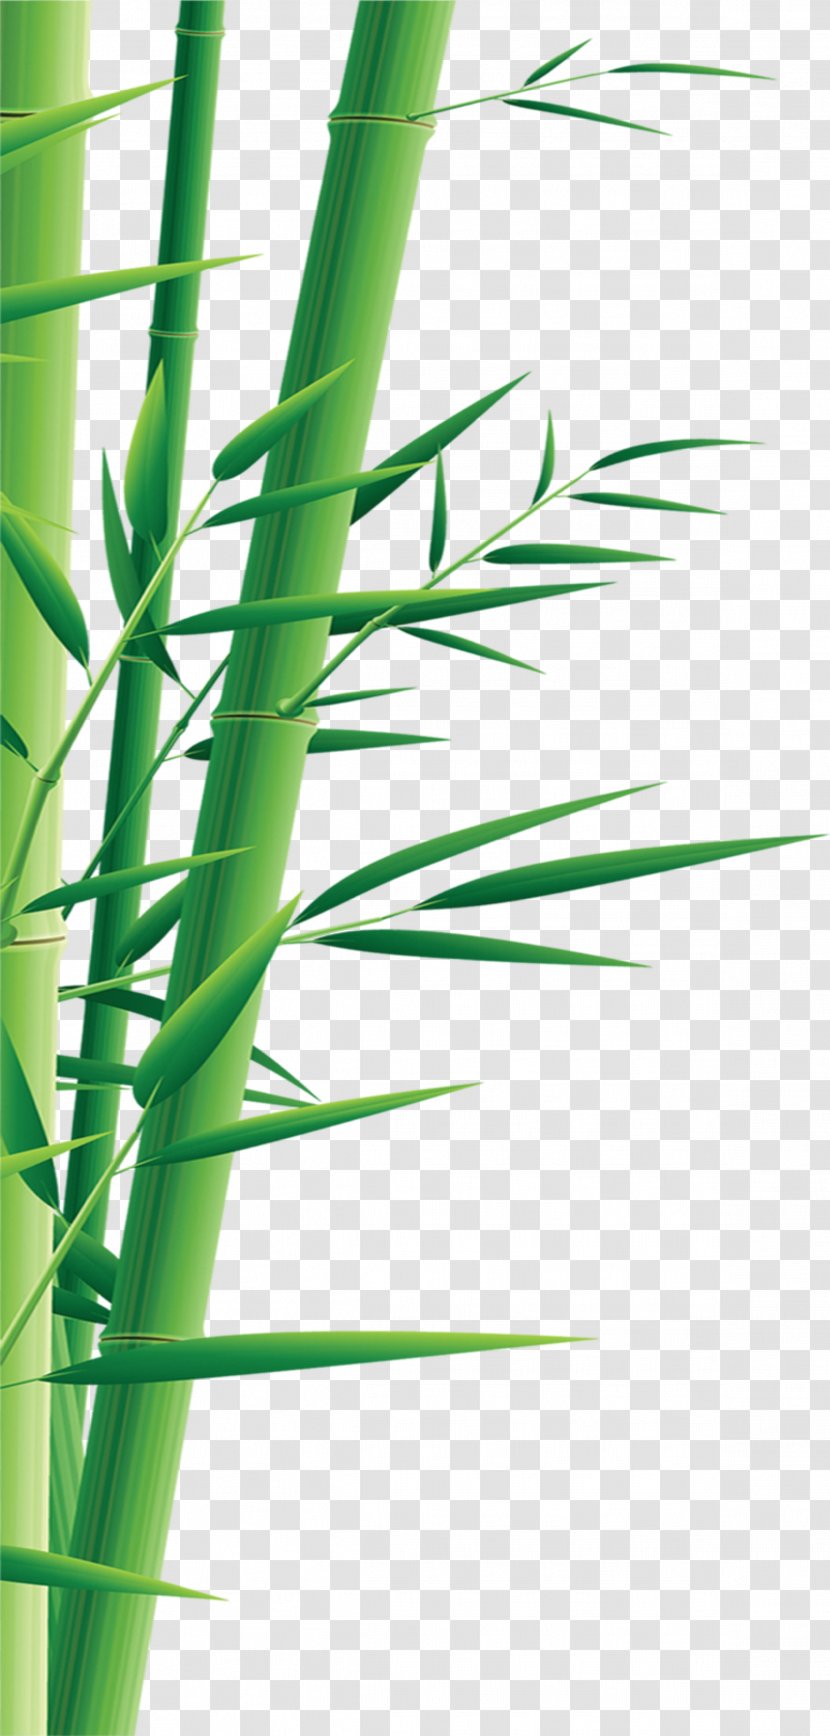 Graphic Design Illustration - Blog - Bamboo Transparent PNG